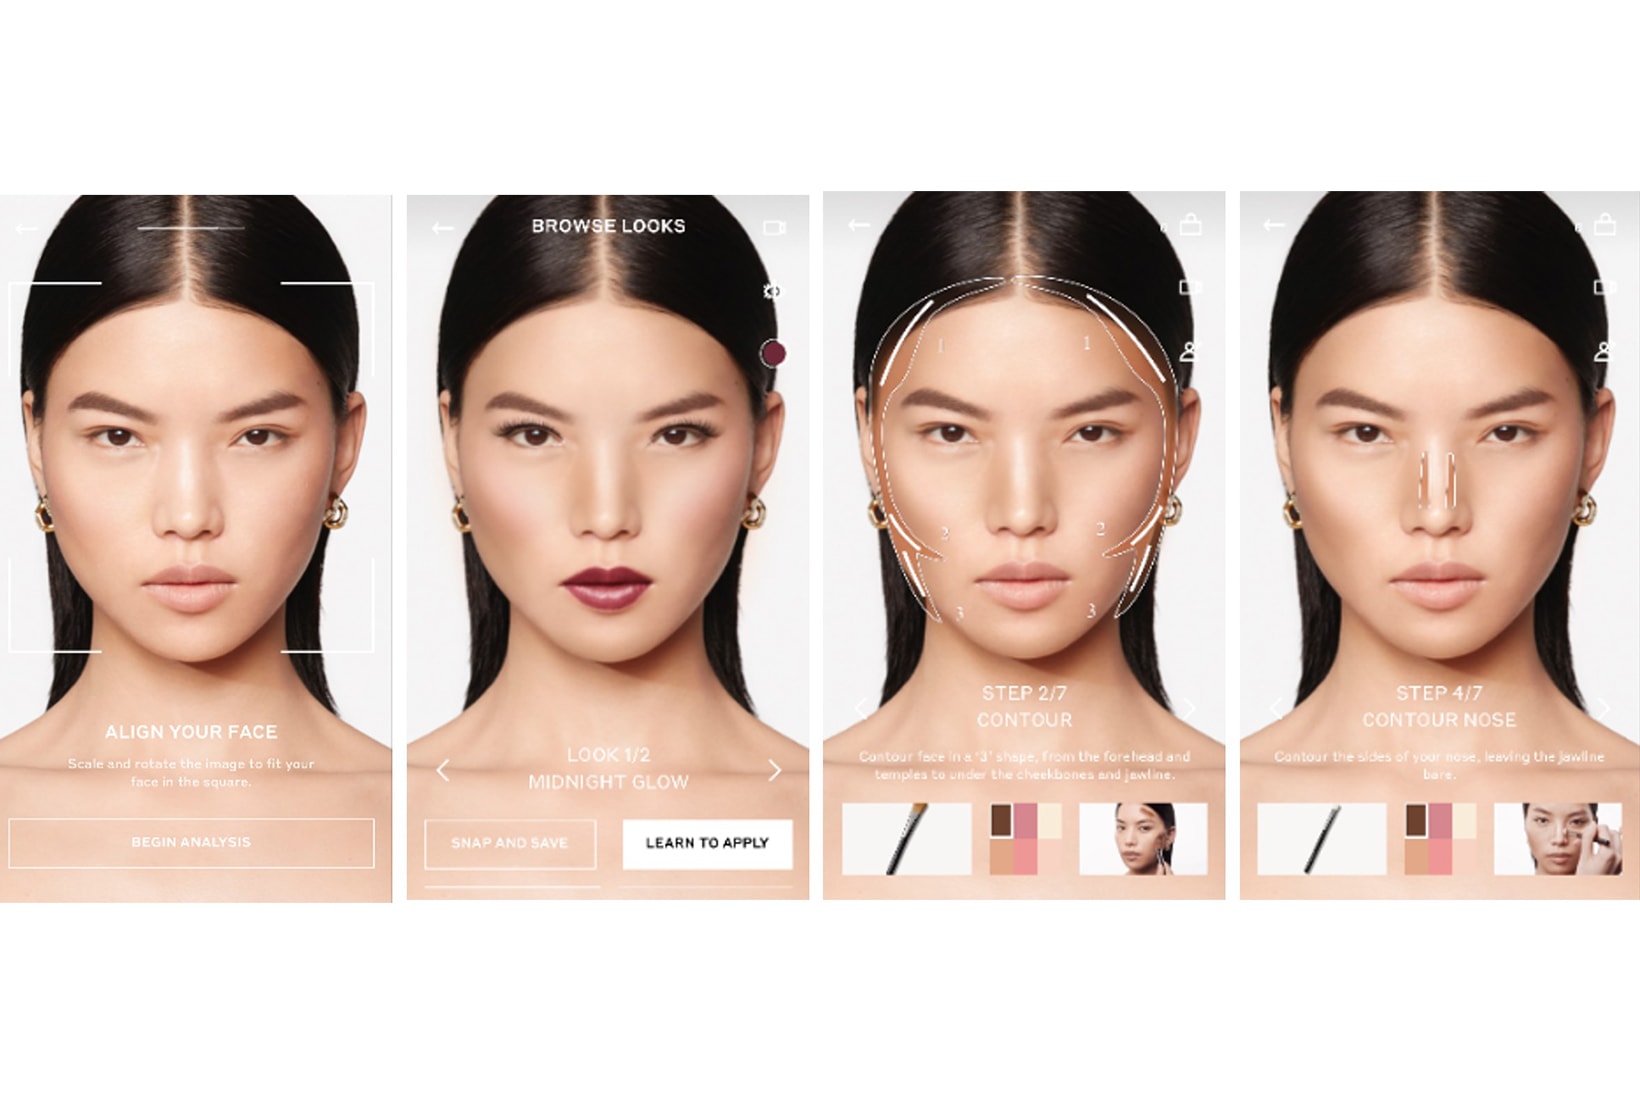 burberry beauty virtual studio makeup looks essentials glow palette